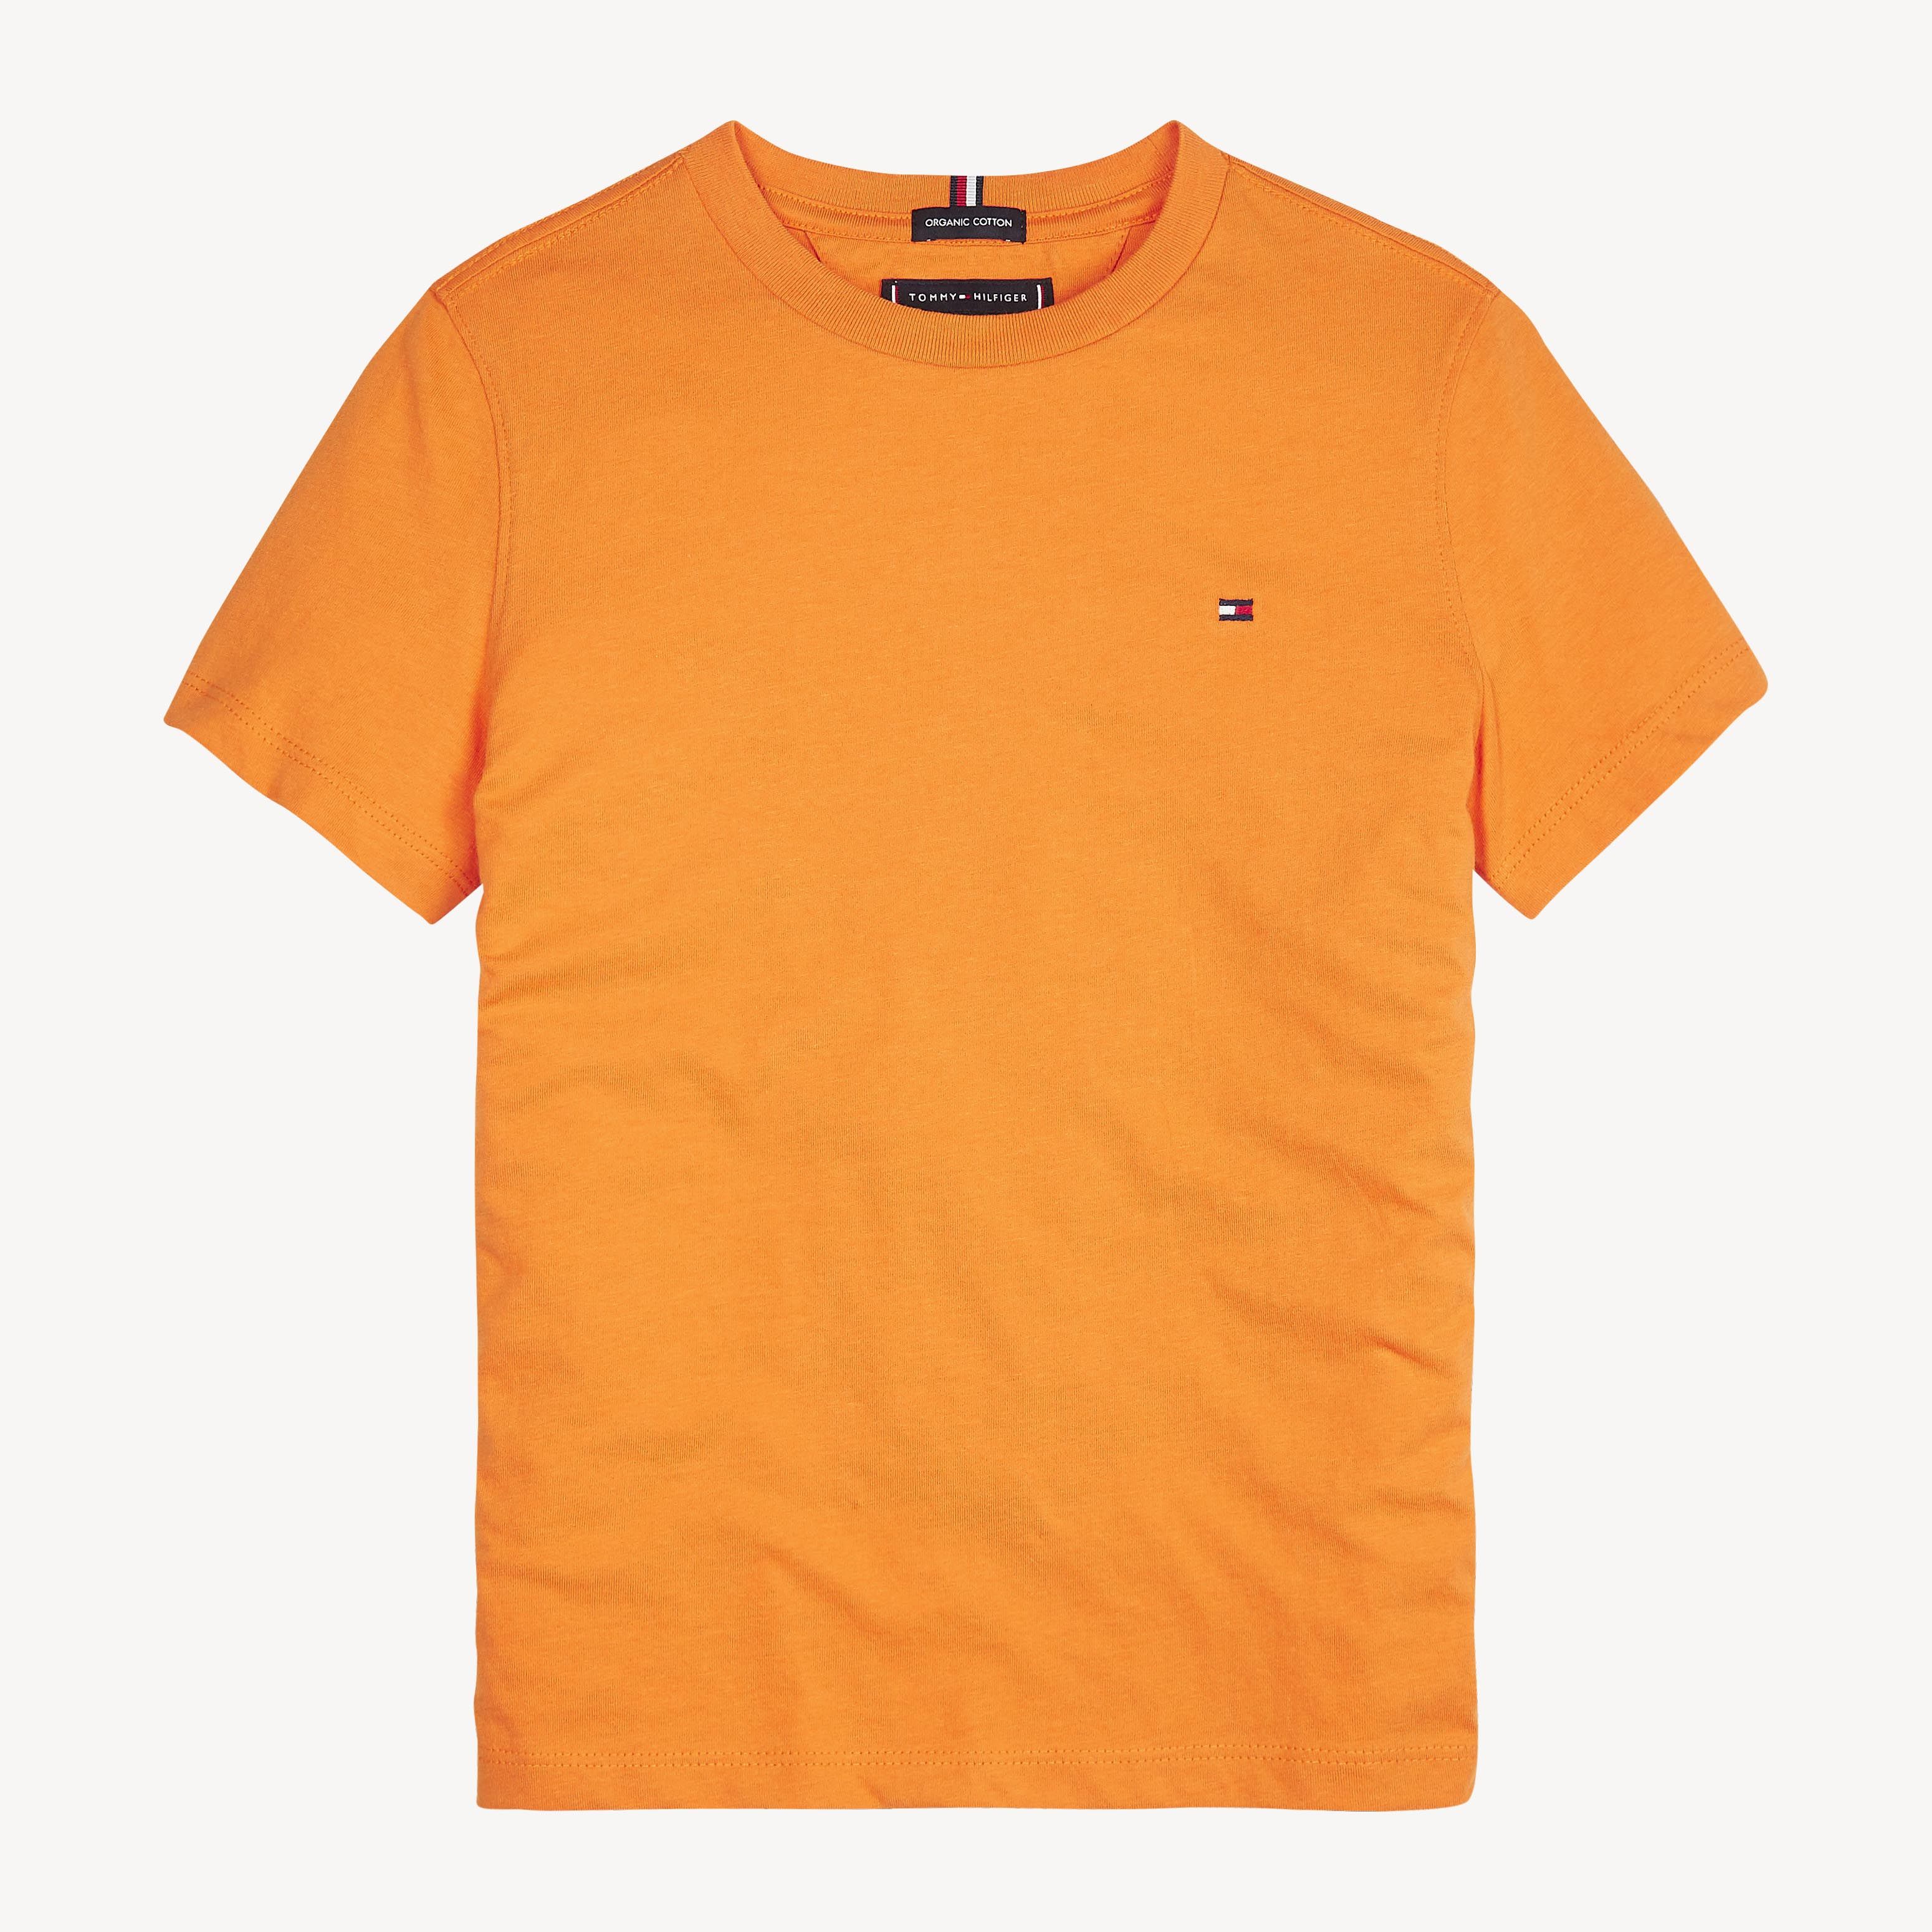 tommy hilfiger orange t shirt